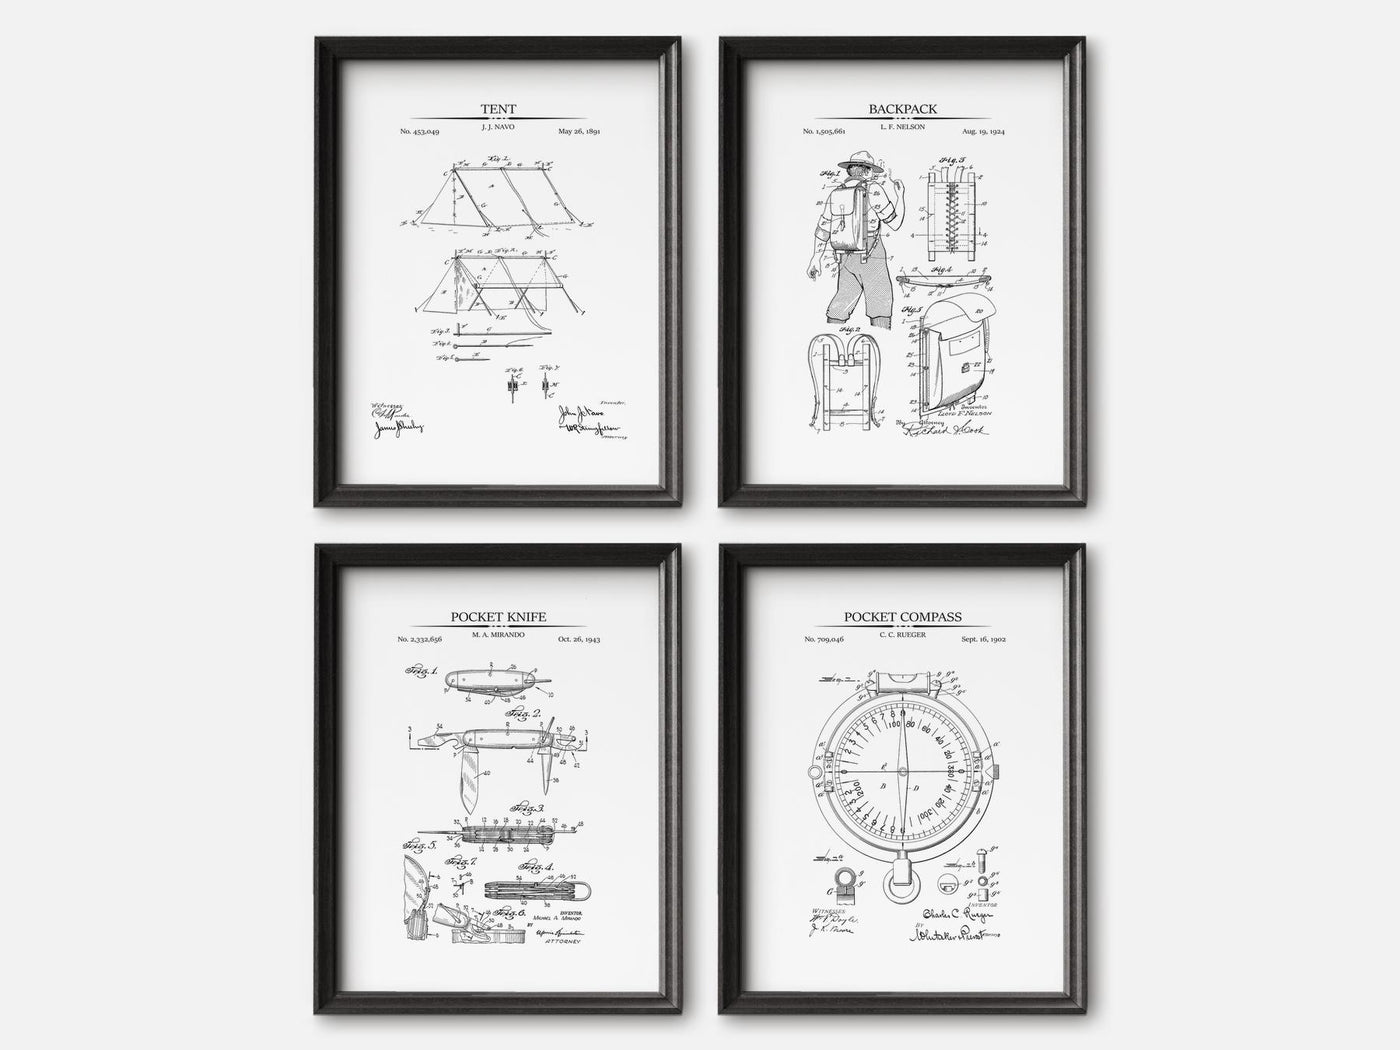 Camping Patent Print Set of 3 mockup - A_t10017-V1-PC_F+B-SS_4-PS_5x7-C_whi variant